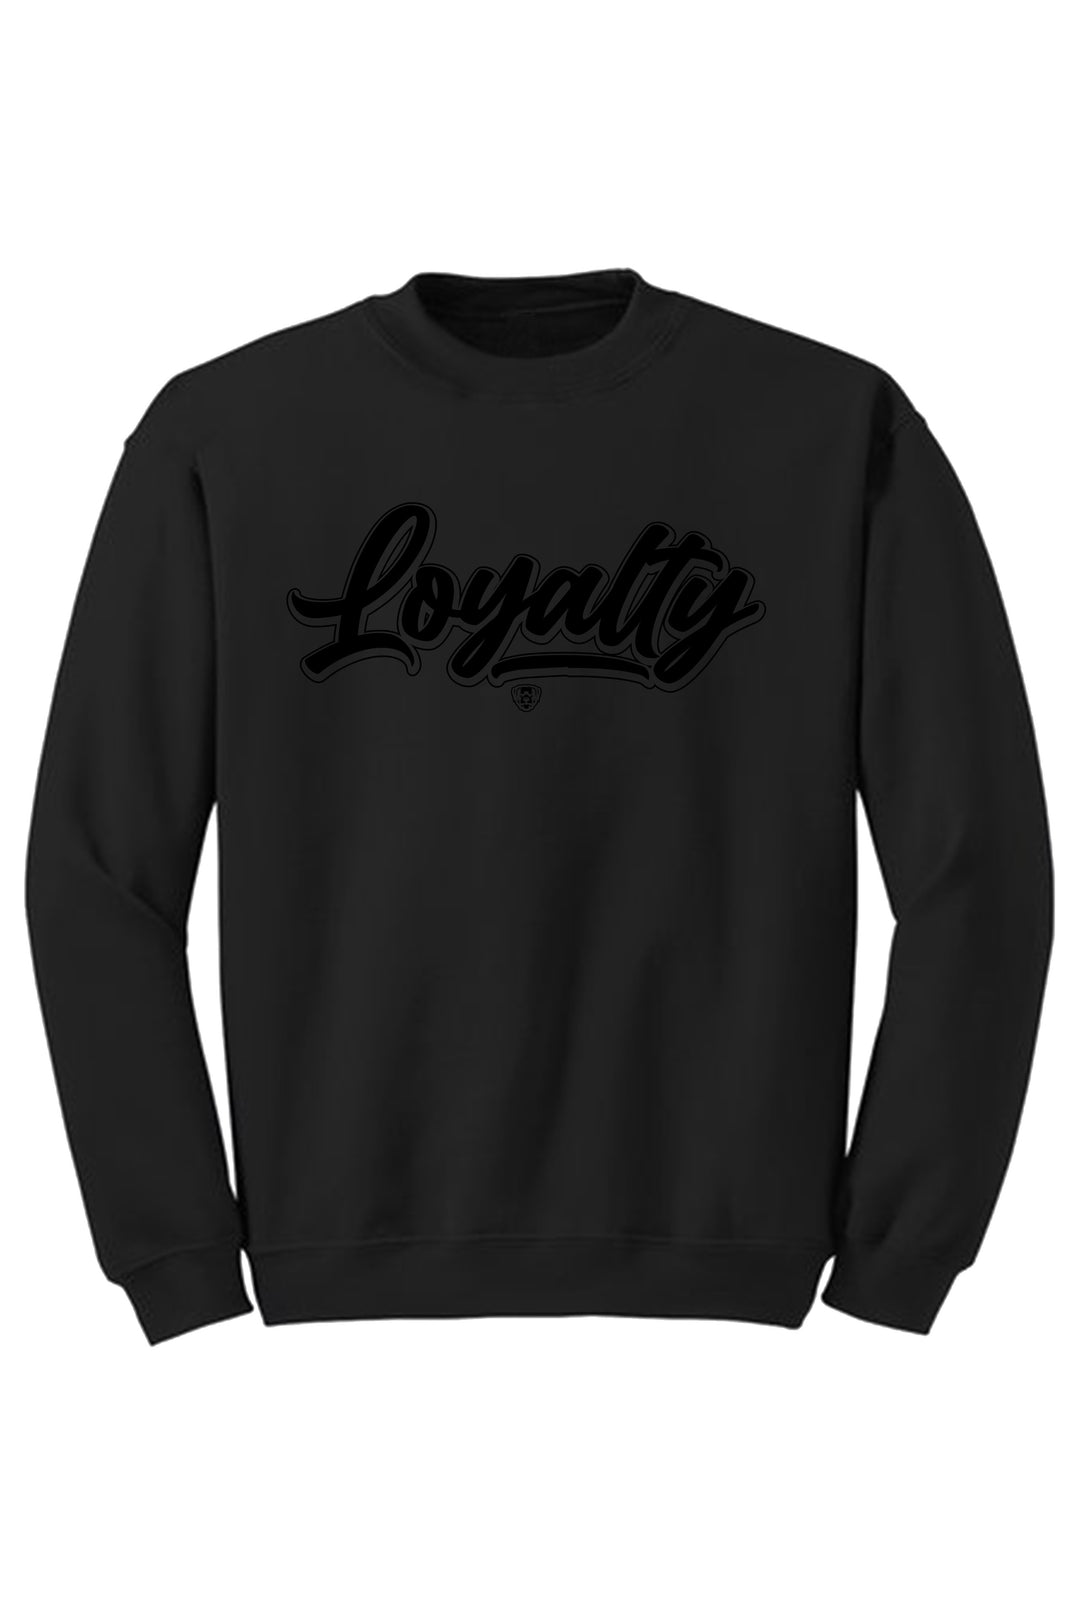 Loyalty Crewneck Sweatshirt (Black Logo) - Zamage